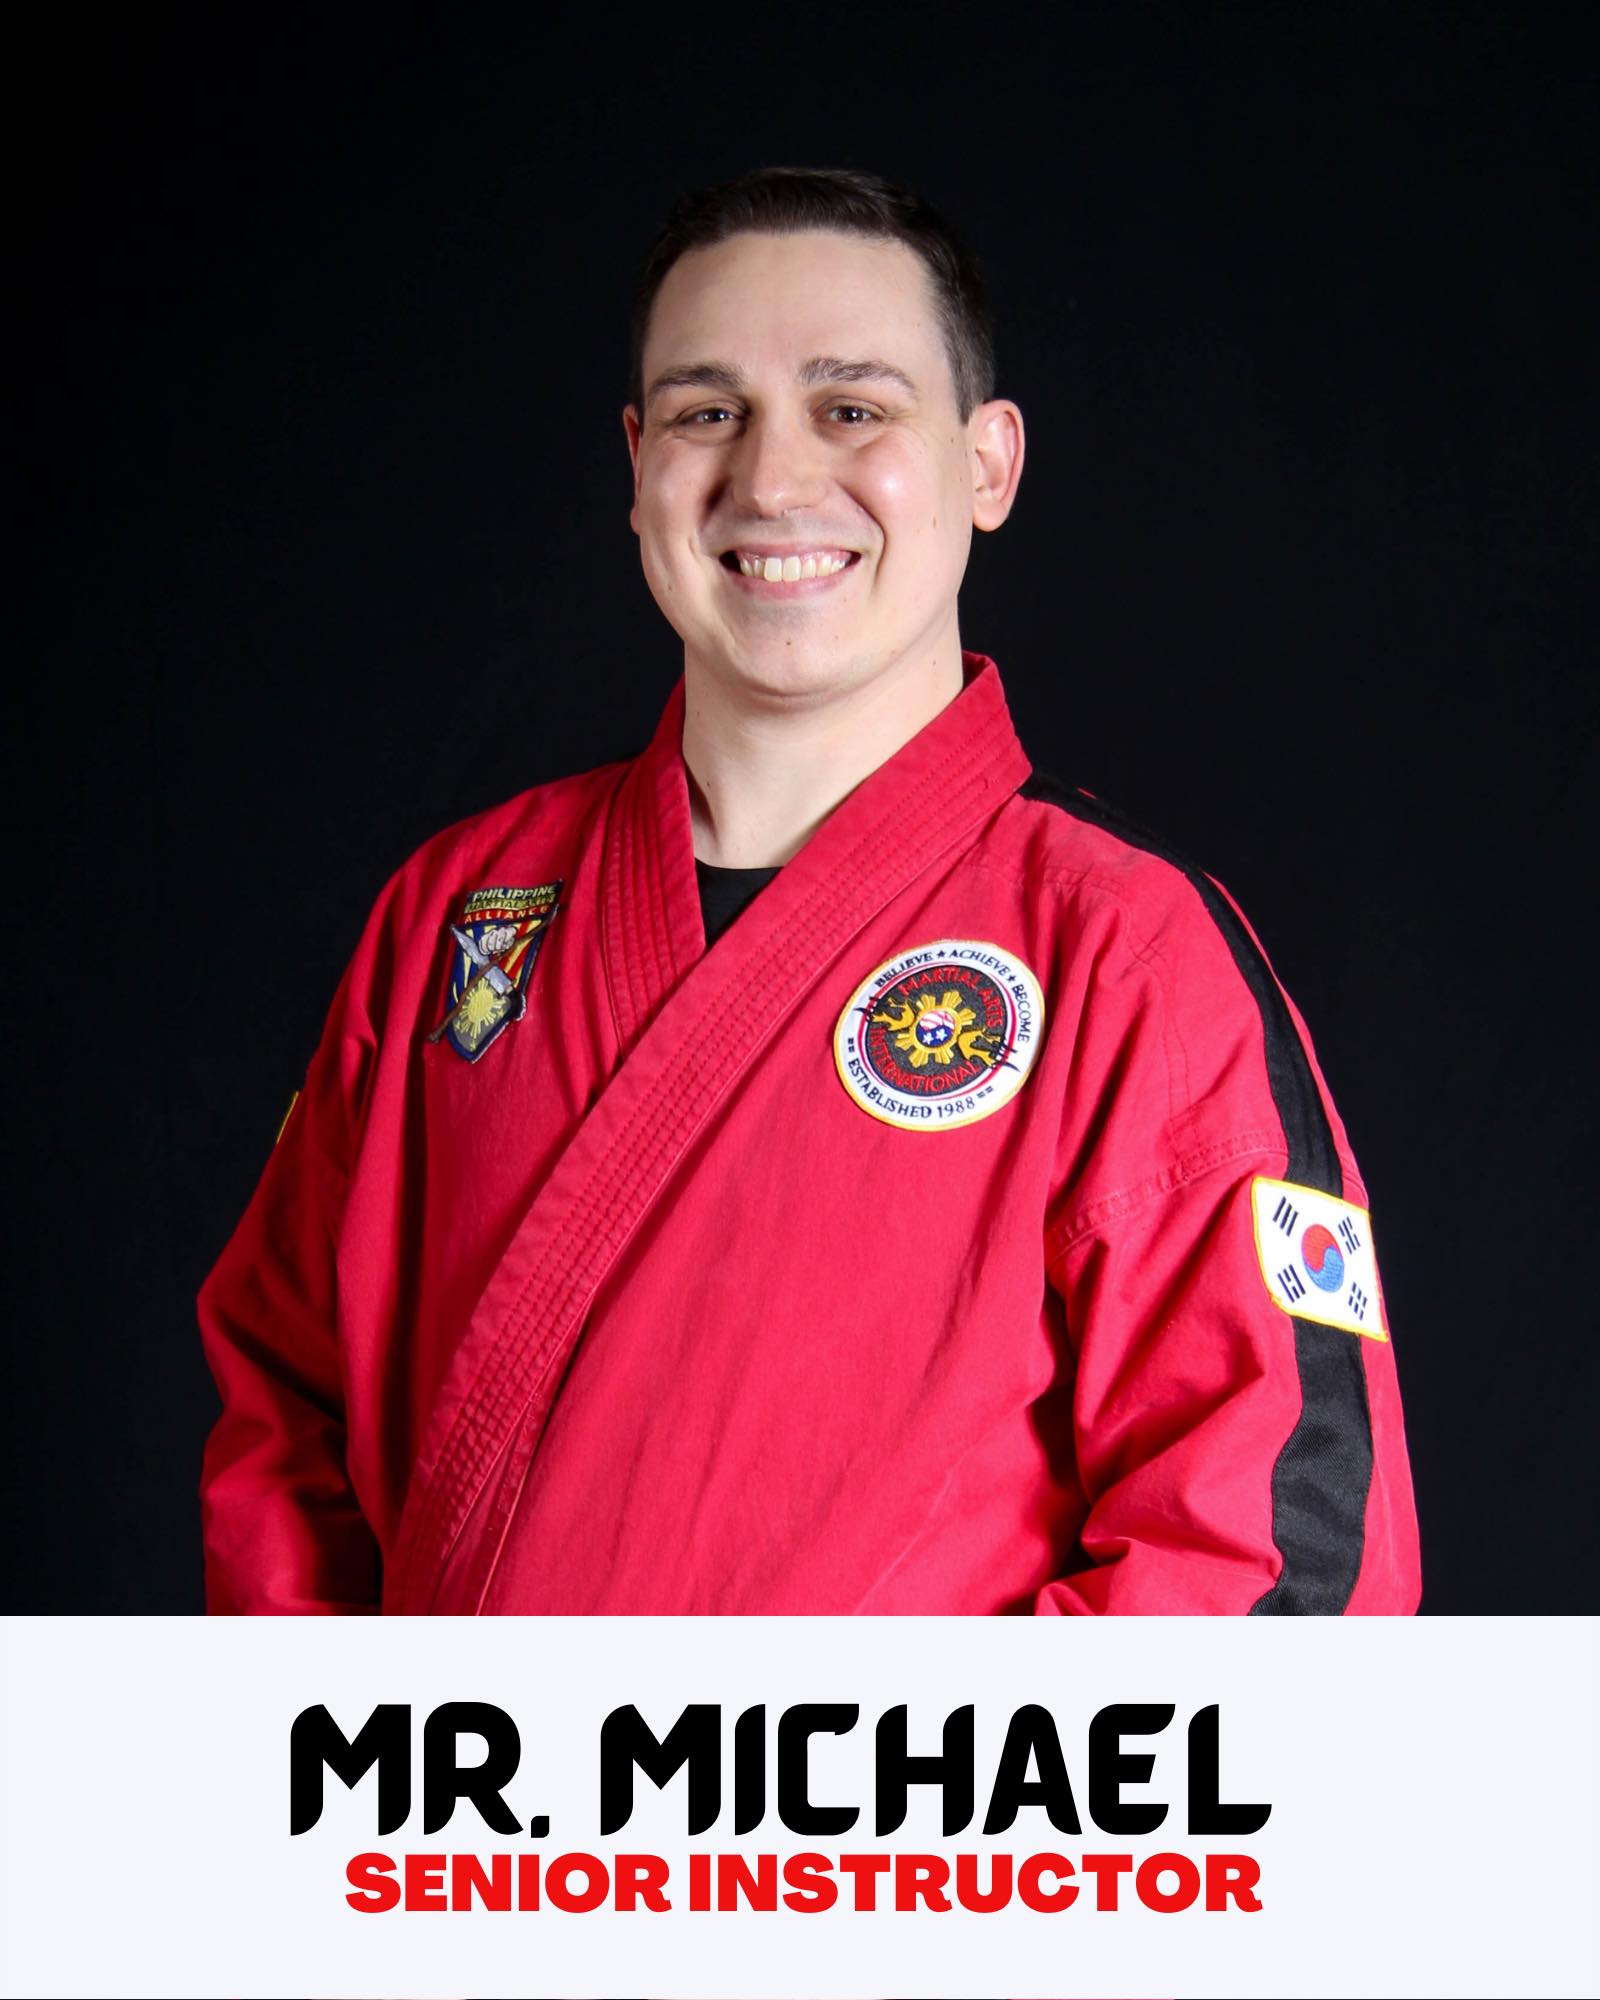 Mr. Michael